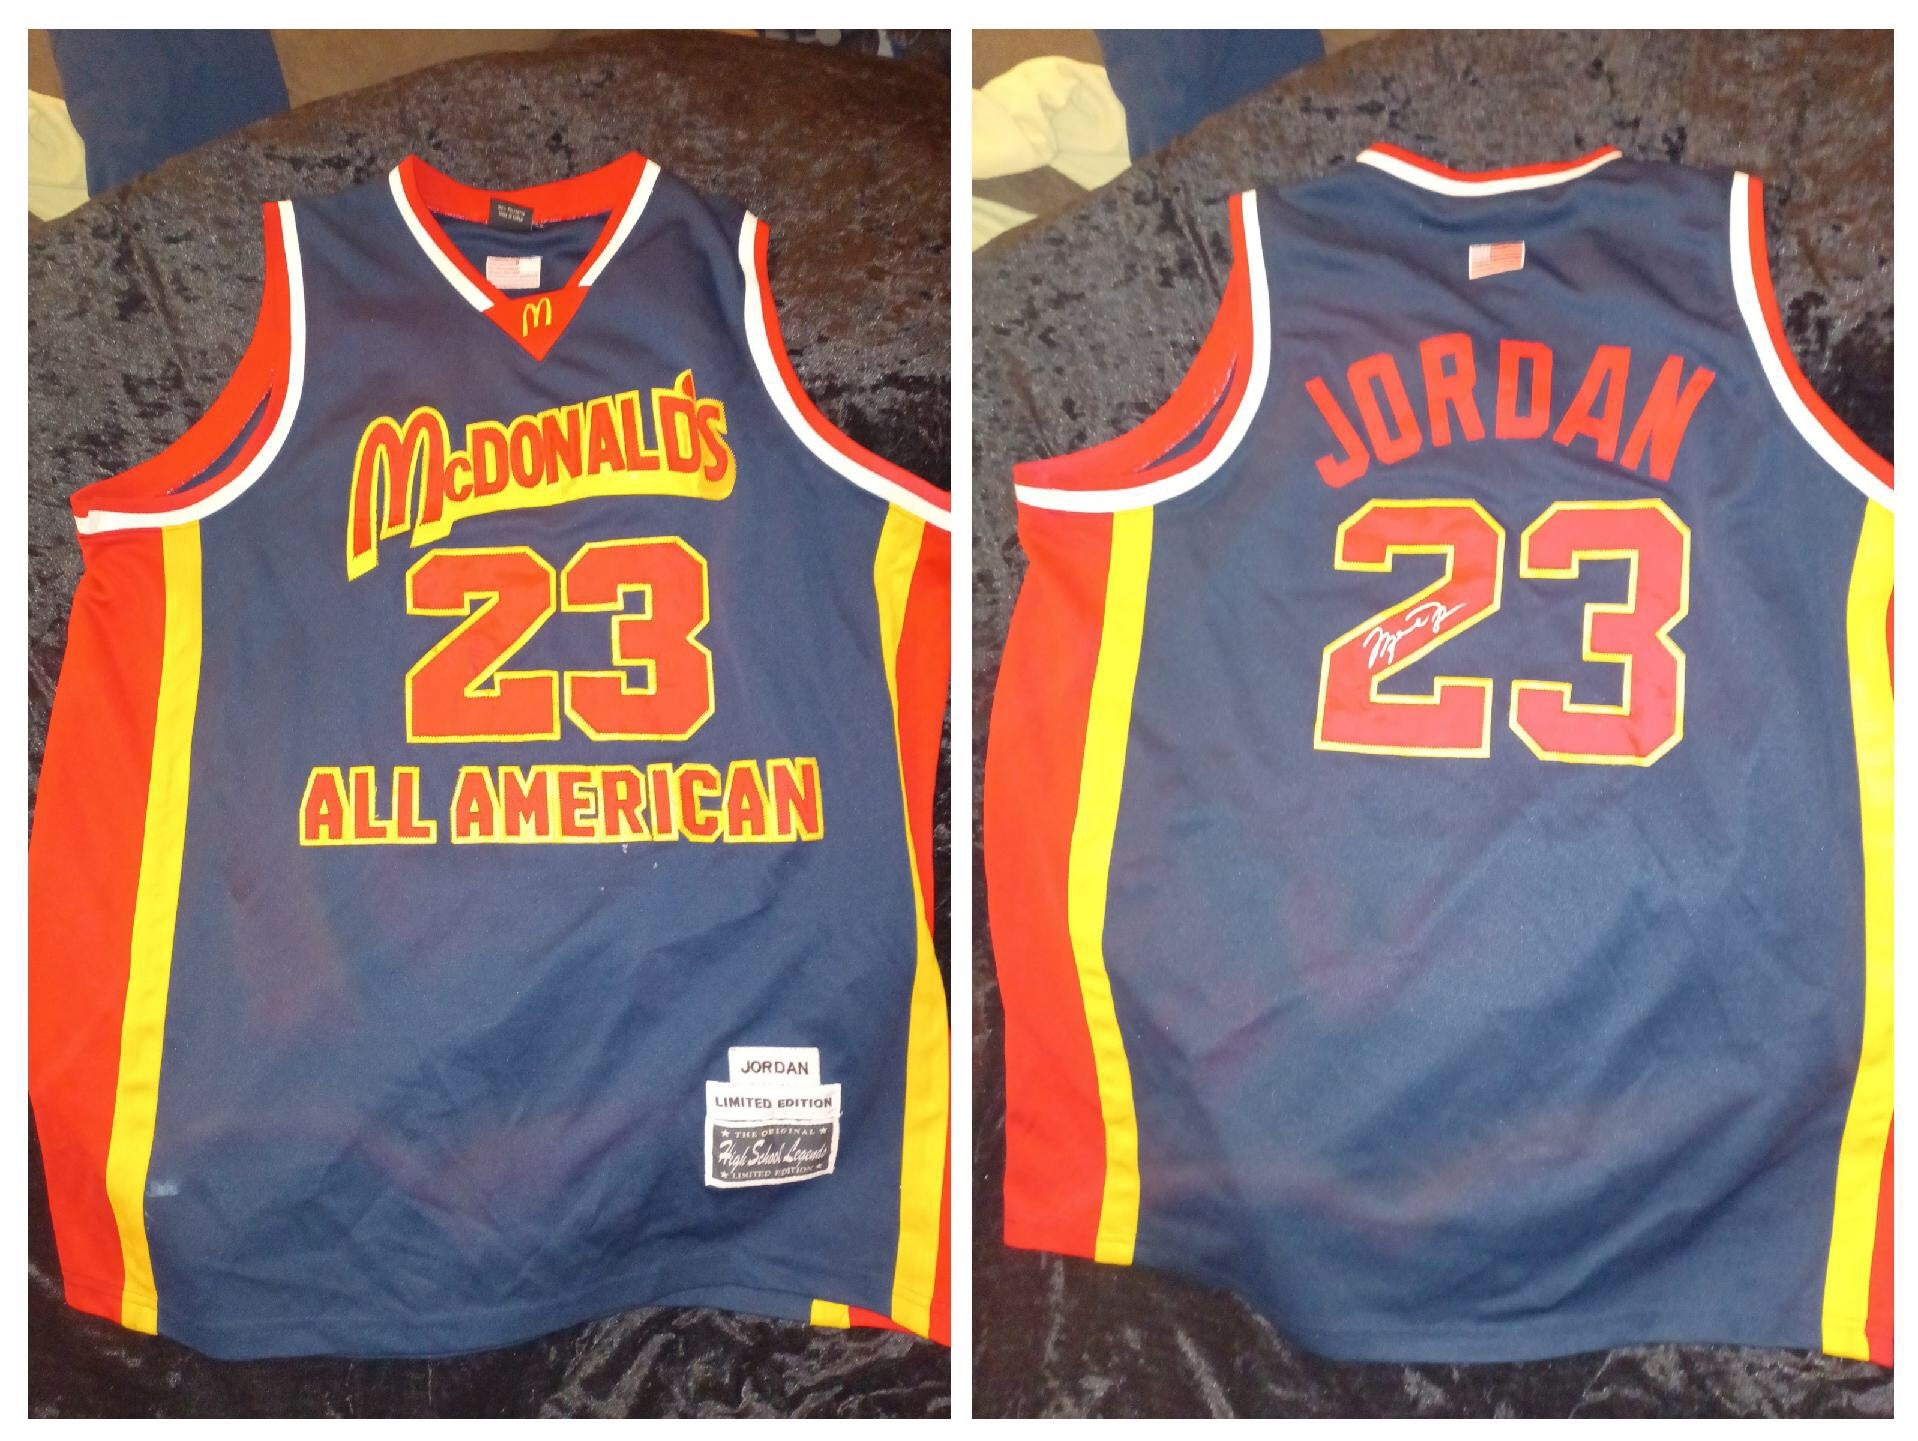 McDonald's All American Legends Michael Jordan Jersey dress s